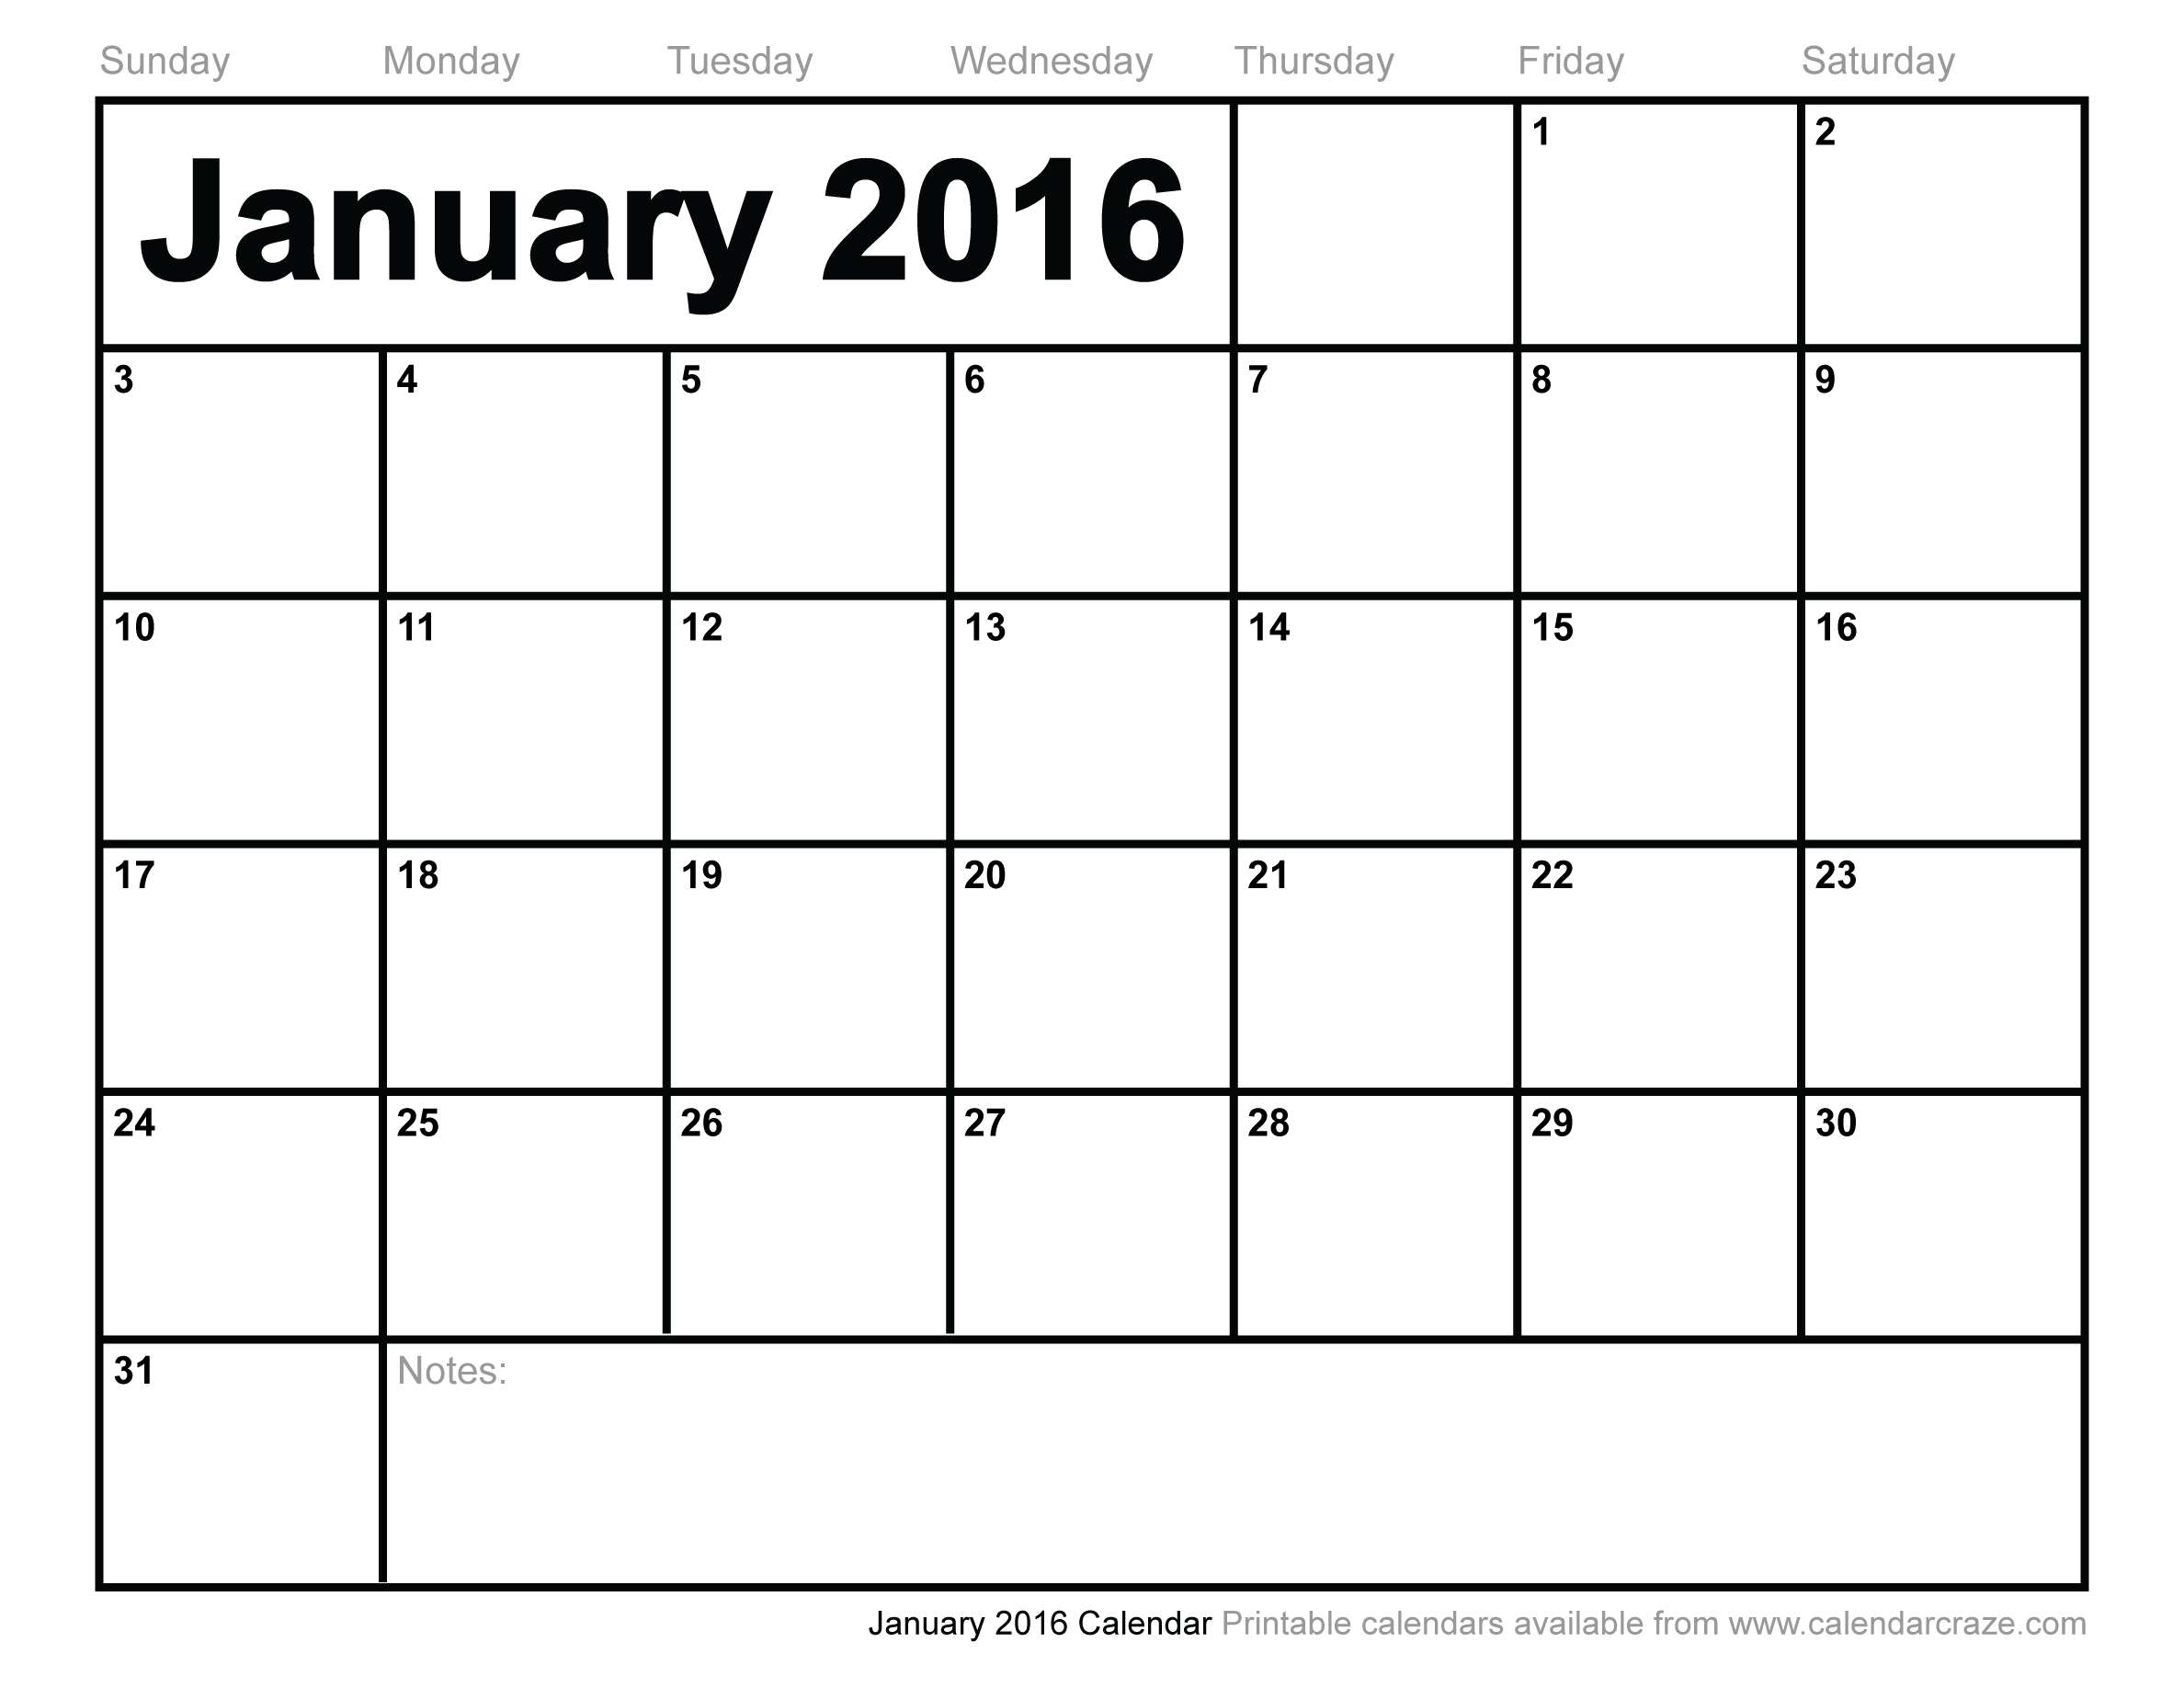 January 2016 Printable Calendar Template Image